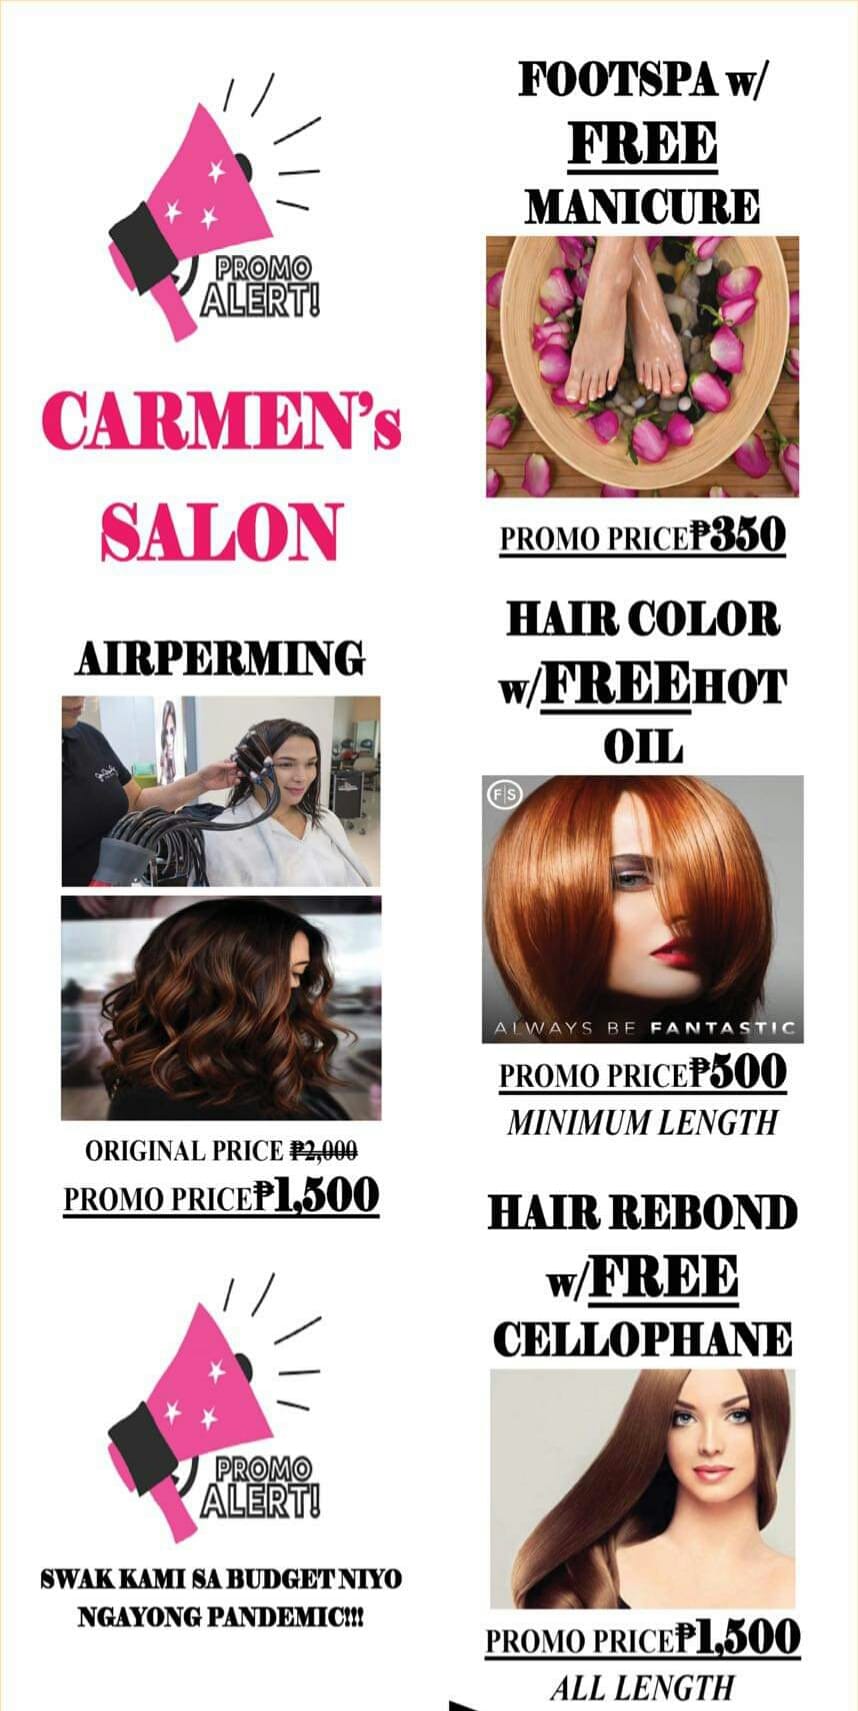 Carmen's Beauty Salon and Barber shop 999 Front St, Uniondale New York 11553